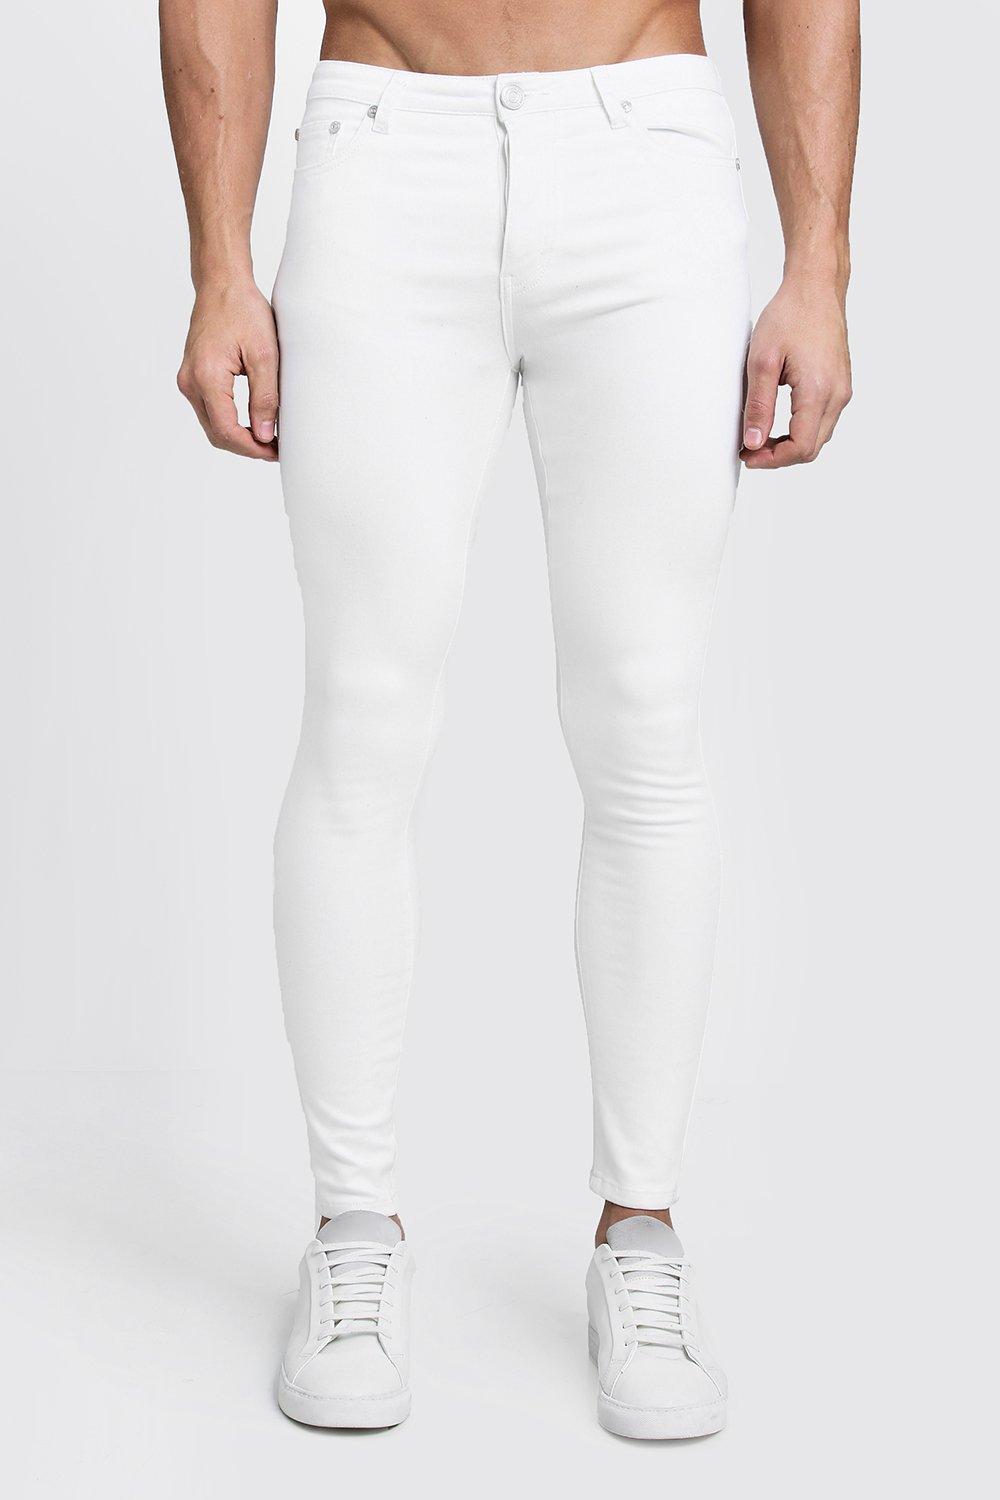 boohooman white jeans